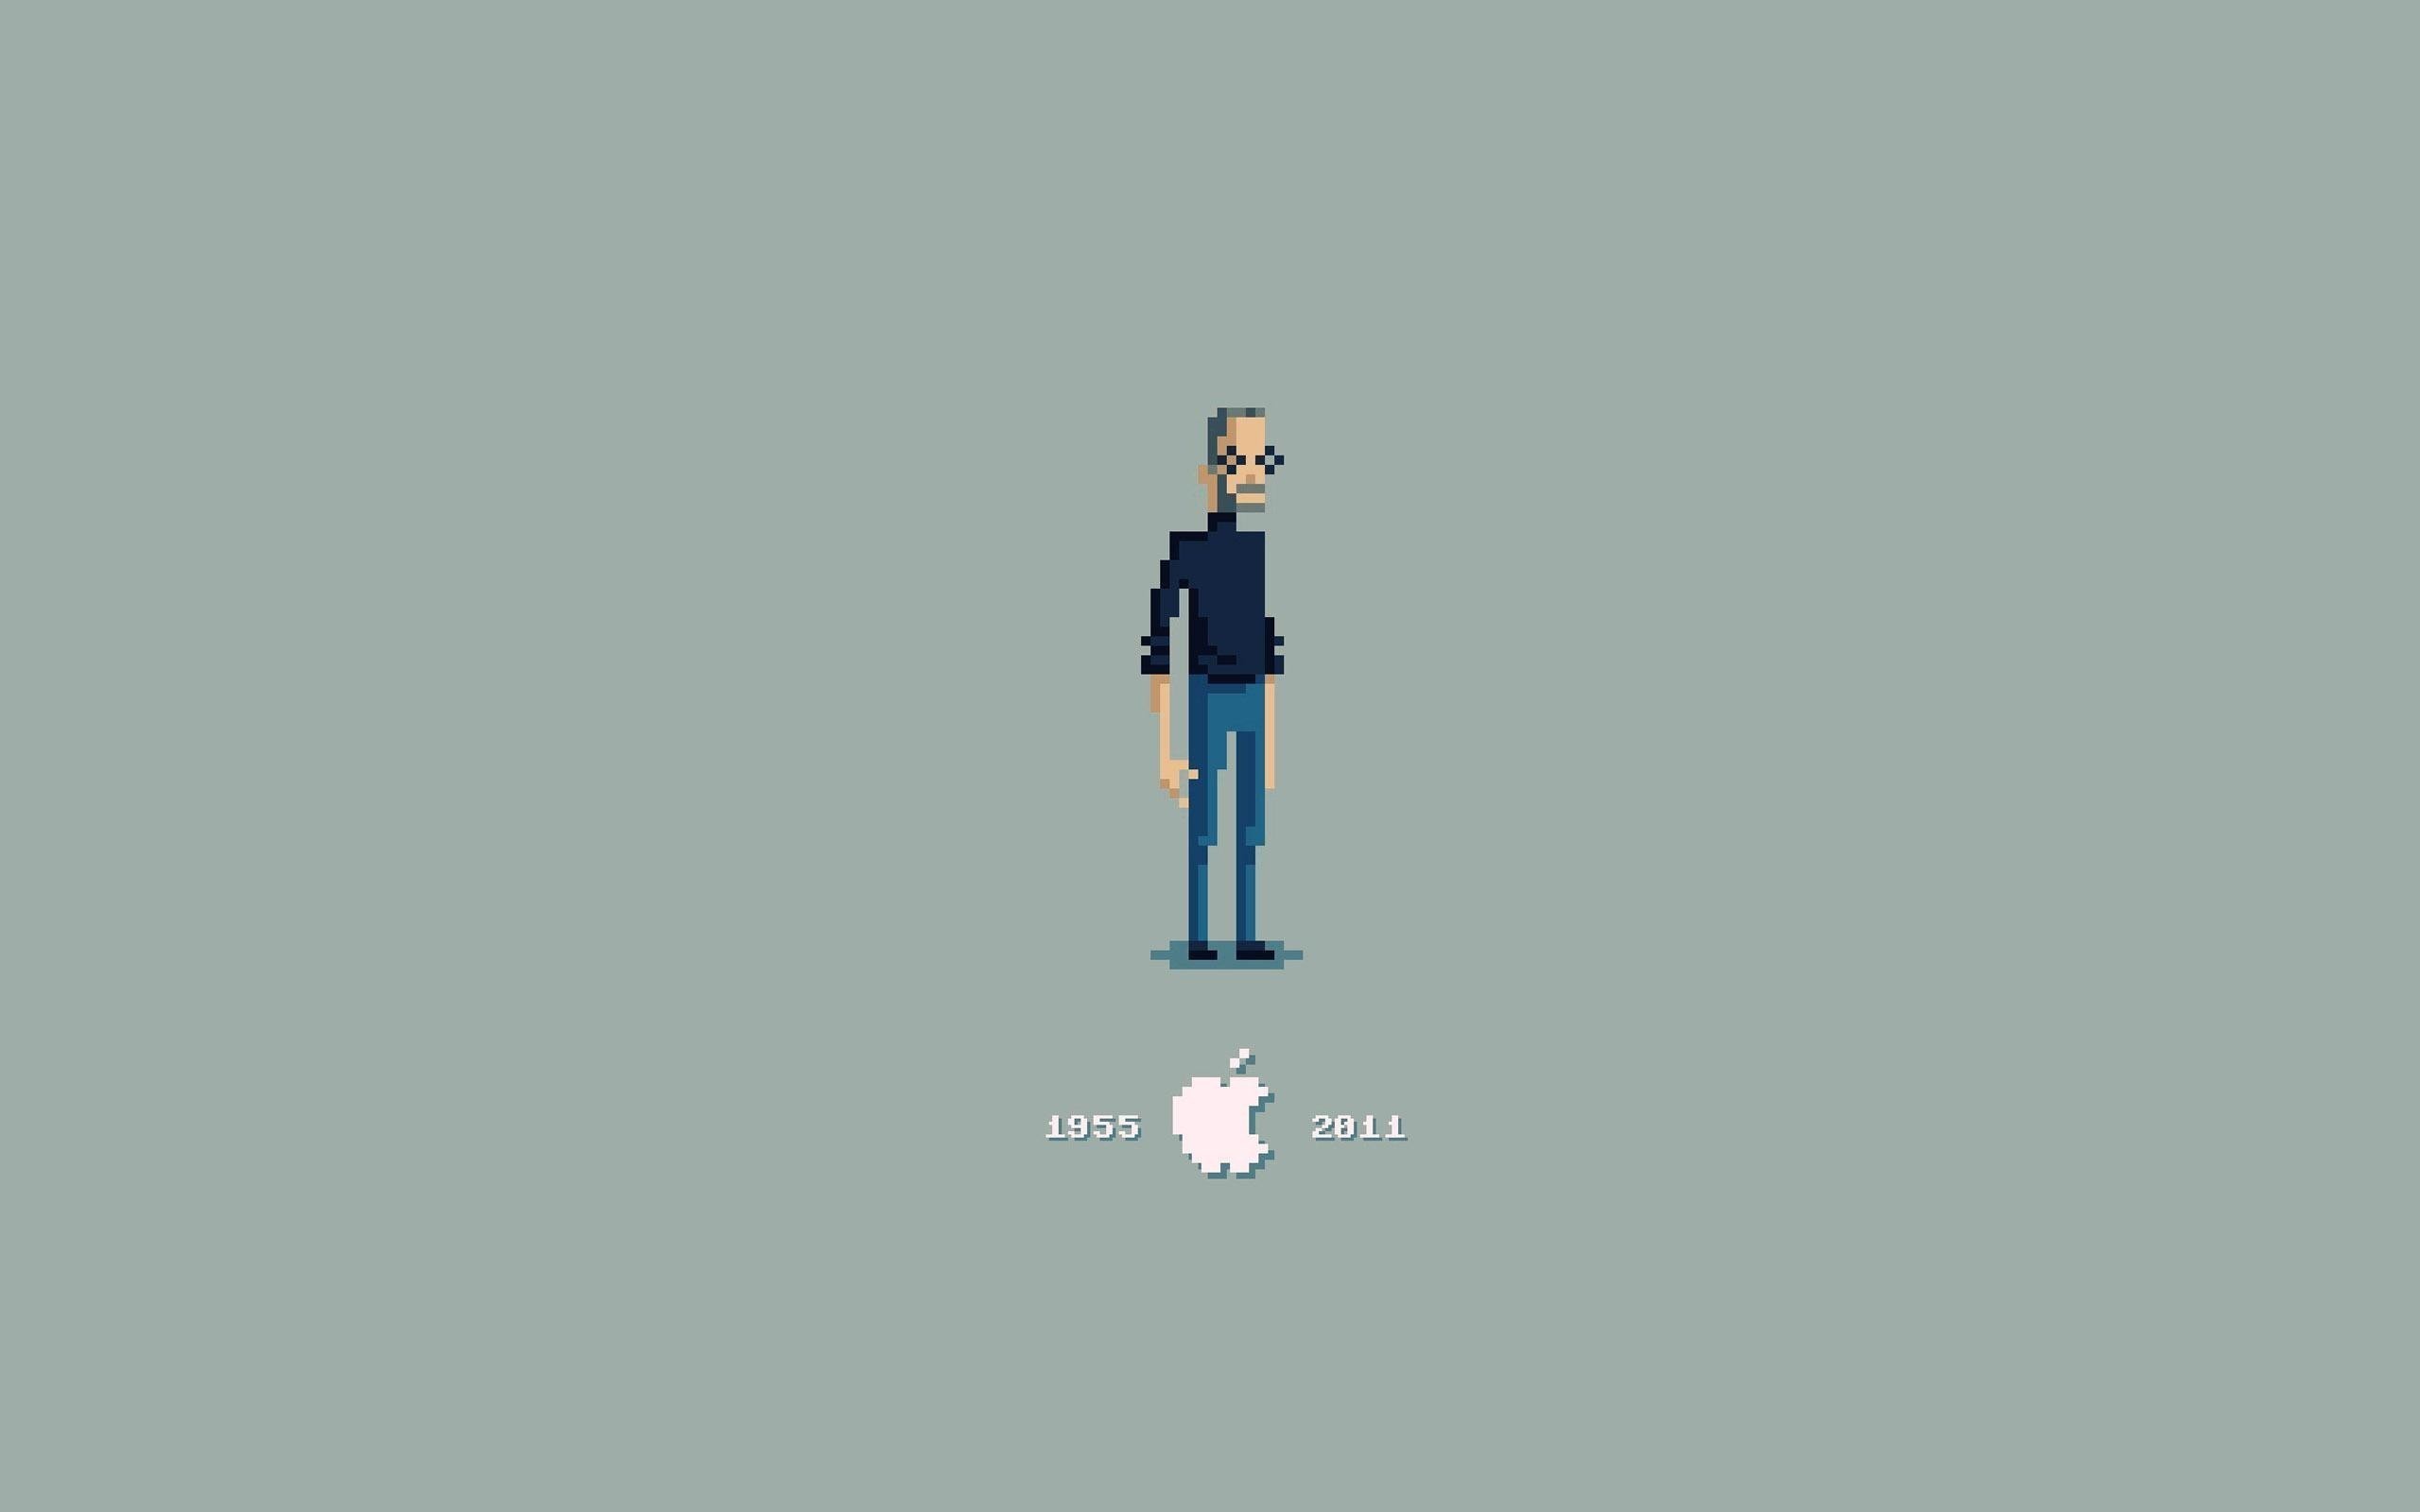 2560x1600 wallpaper Steve Jobs